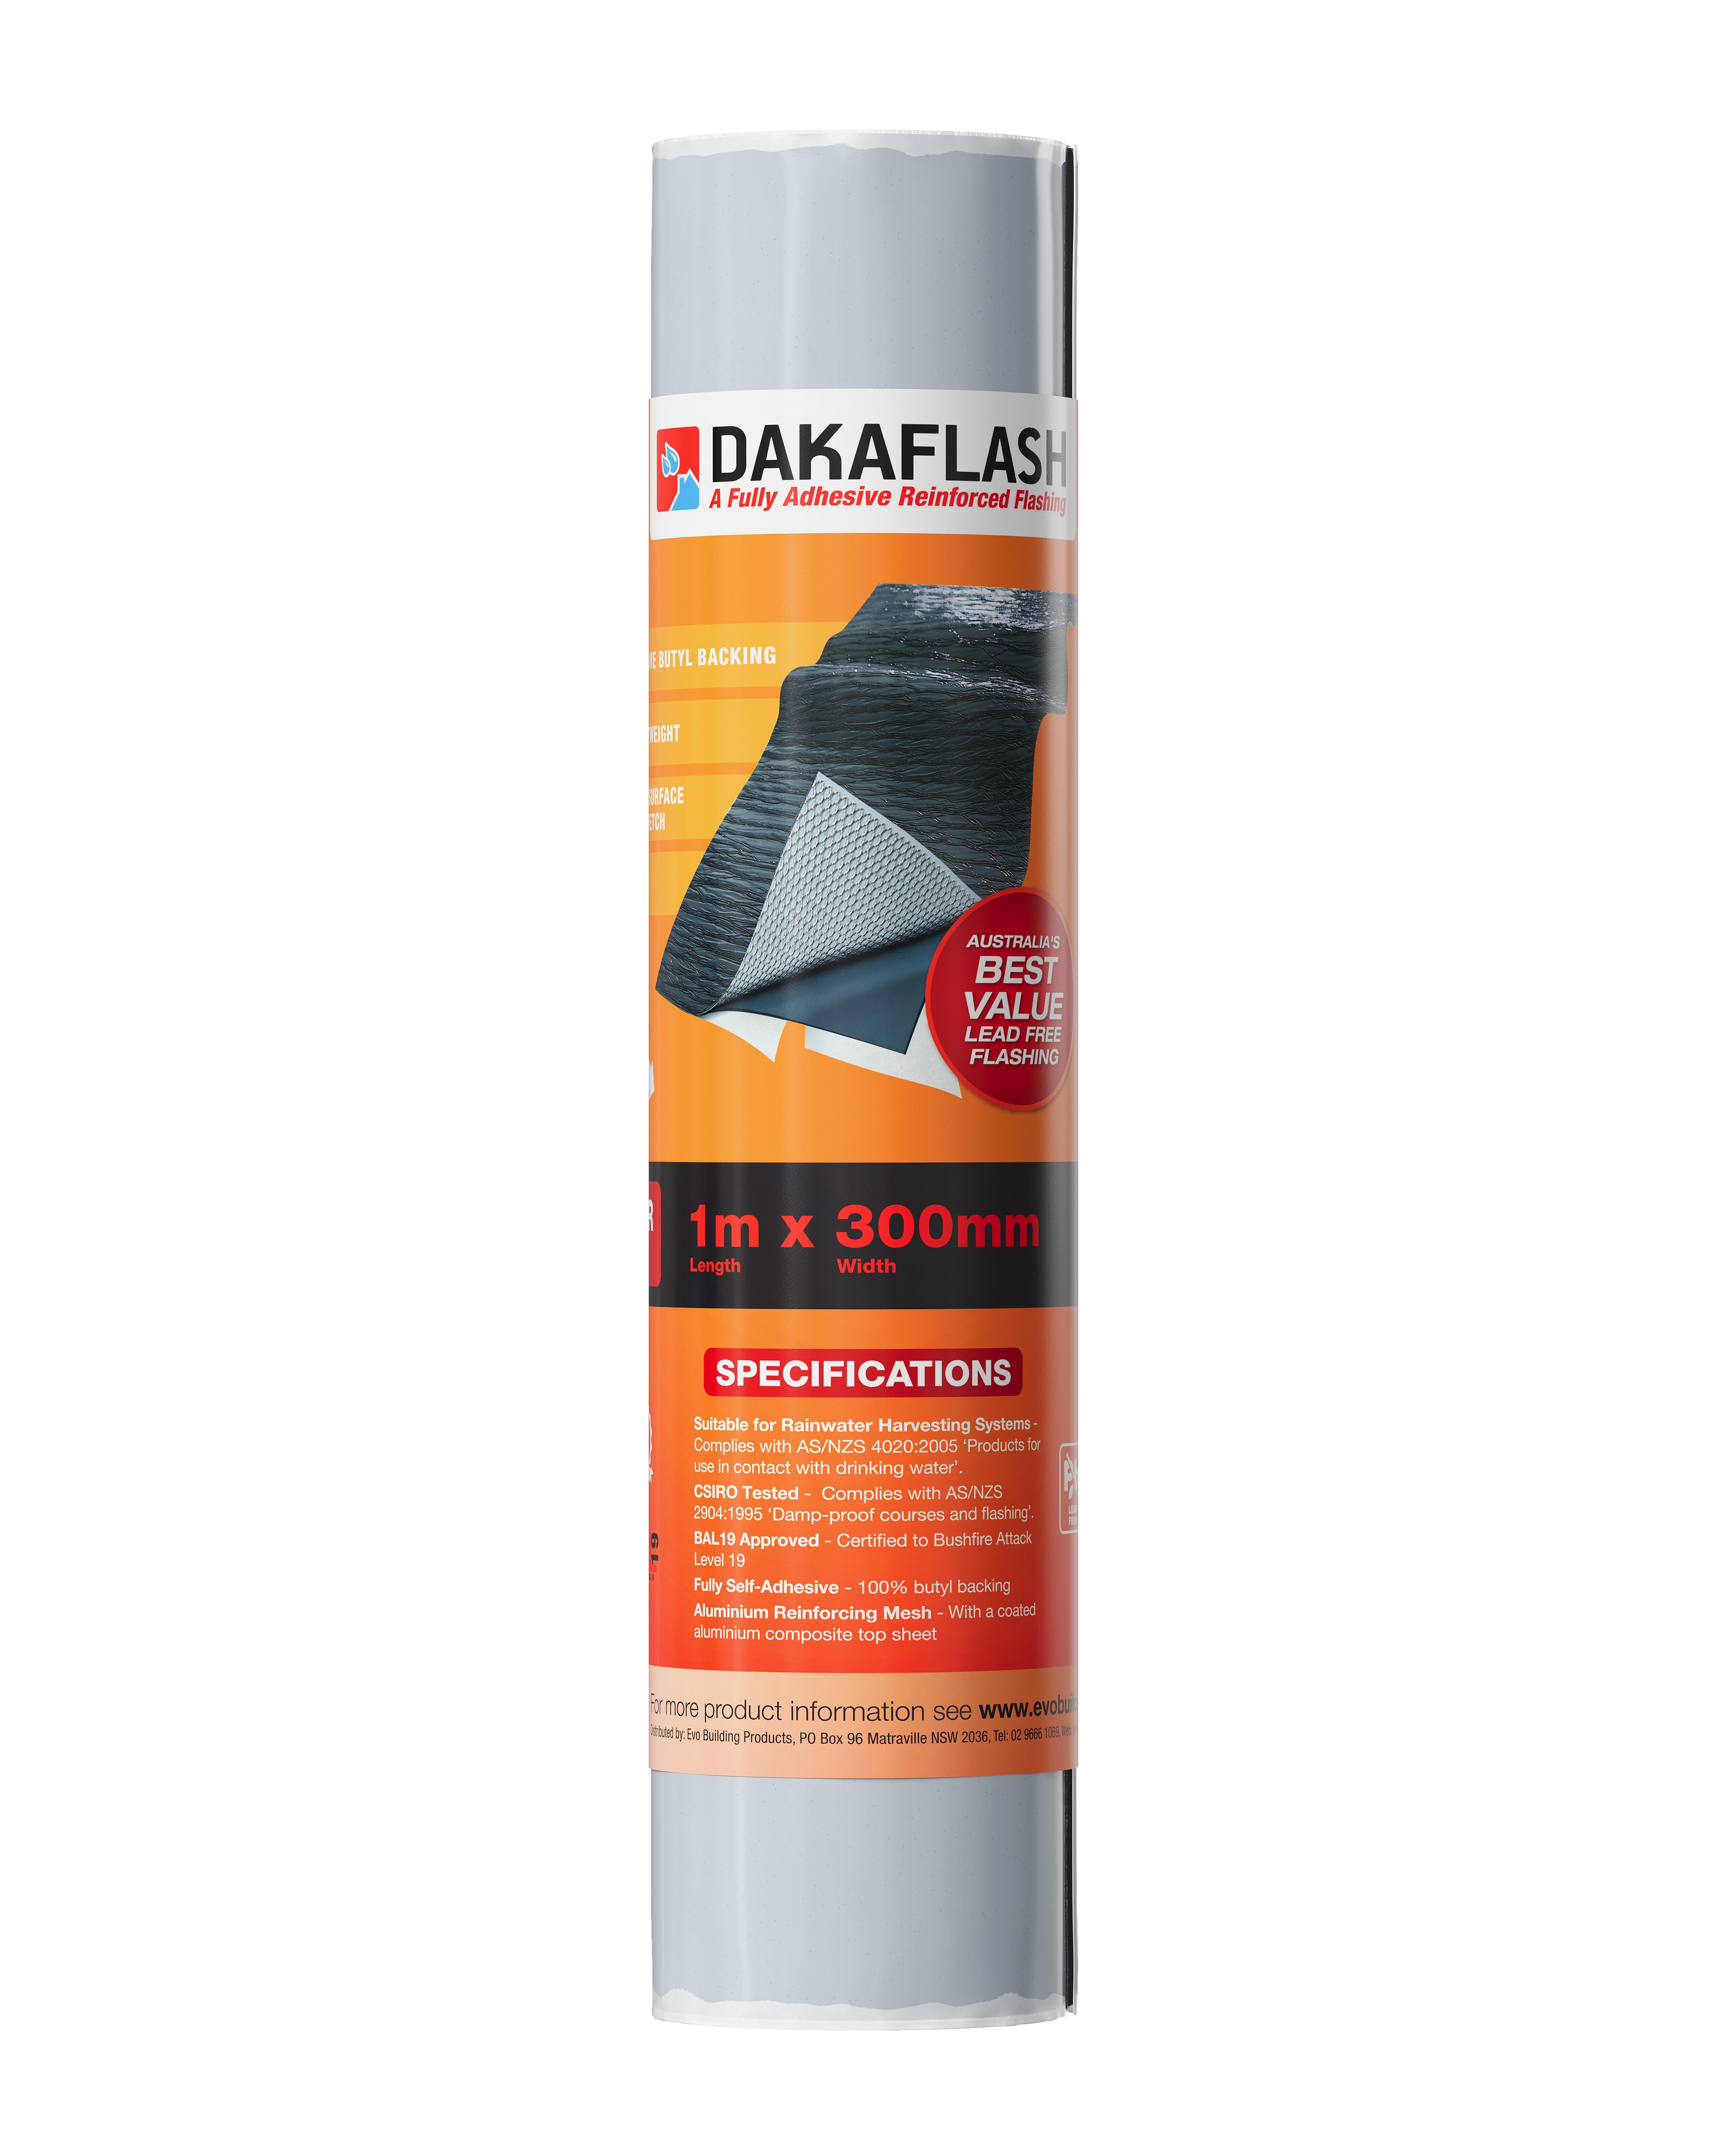 Dakaflash - A Fully Adhesive Reinforced Flashing